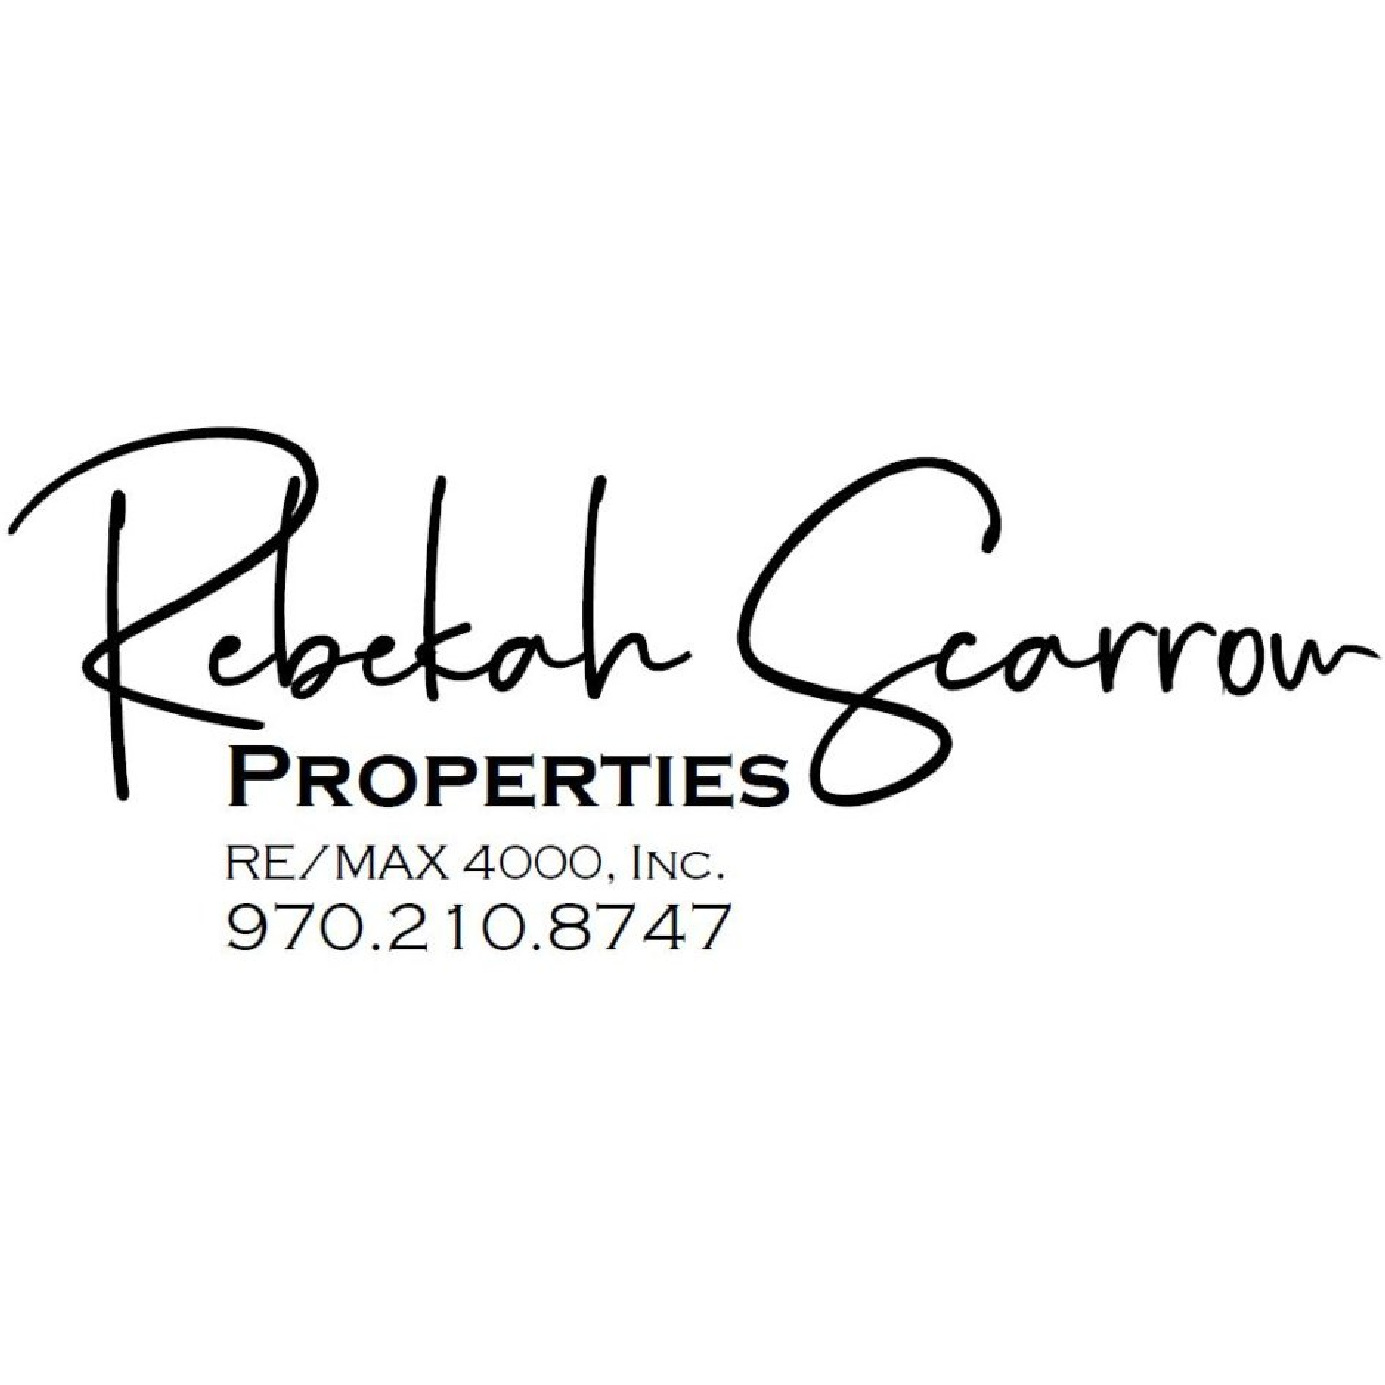 Rebekah Scarrow Properties, RE/ MAX 4000